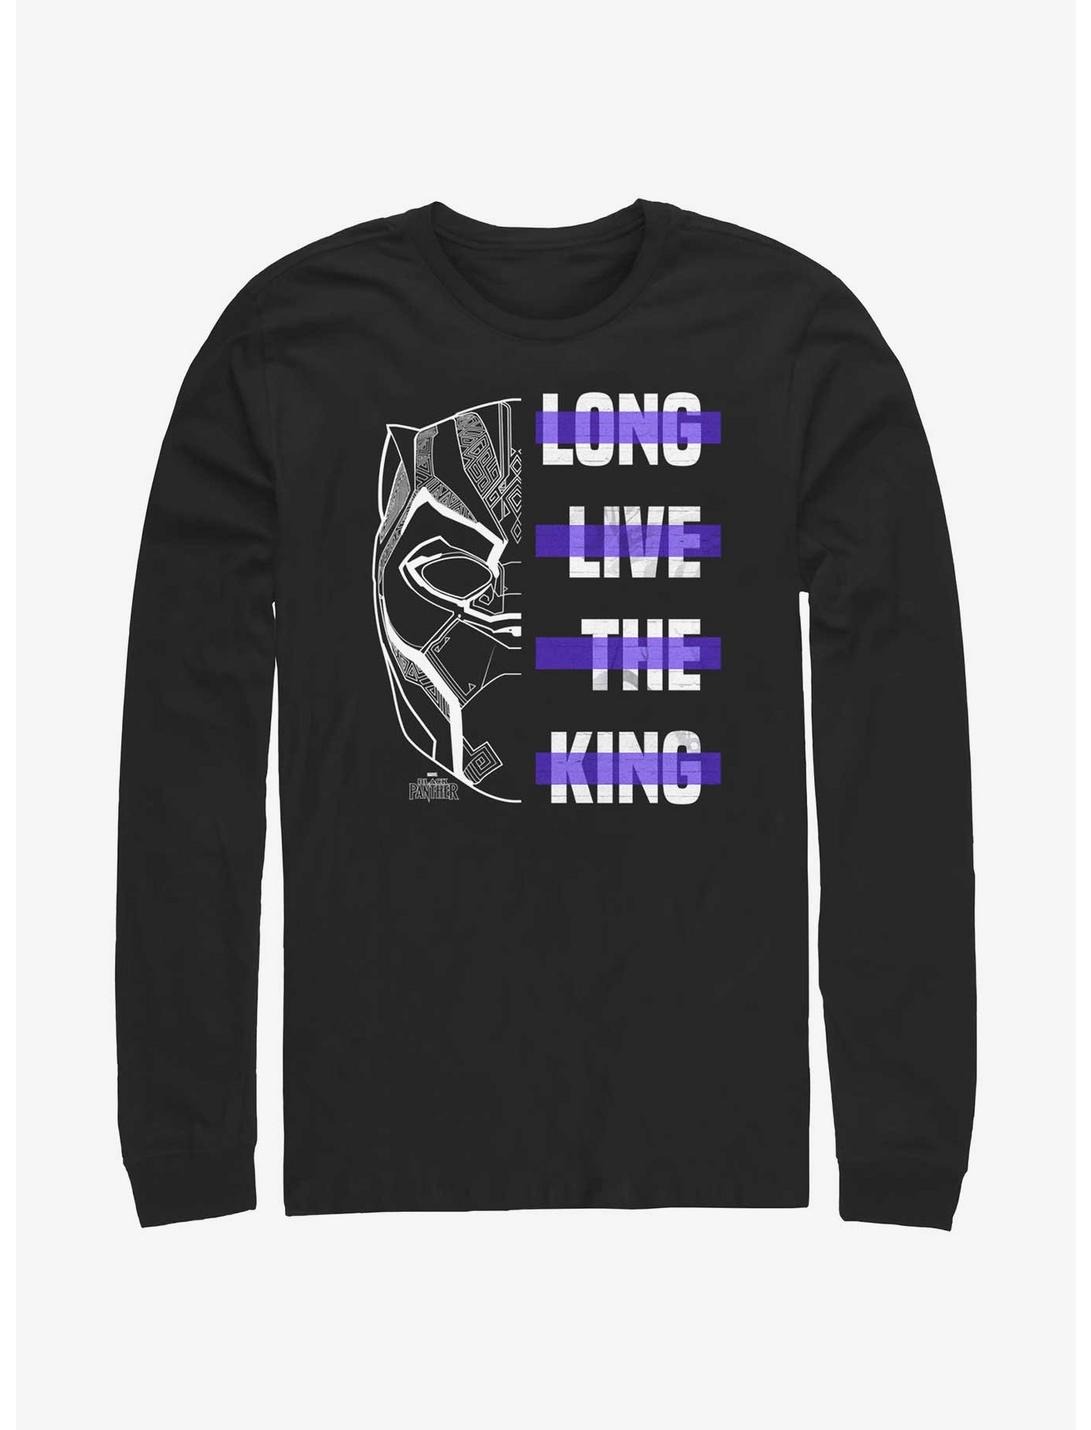 Marvel Black Panther Long Live The King Long-Sleeve T-Shirt, BLACK, hi-res